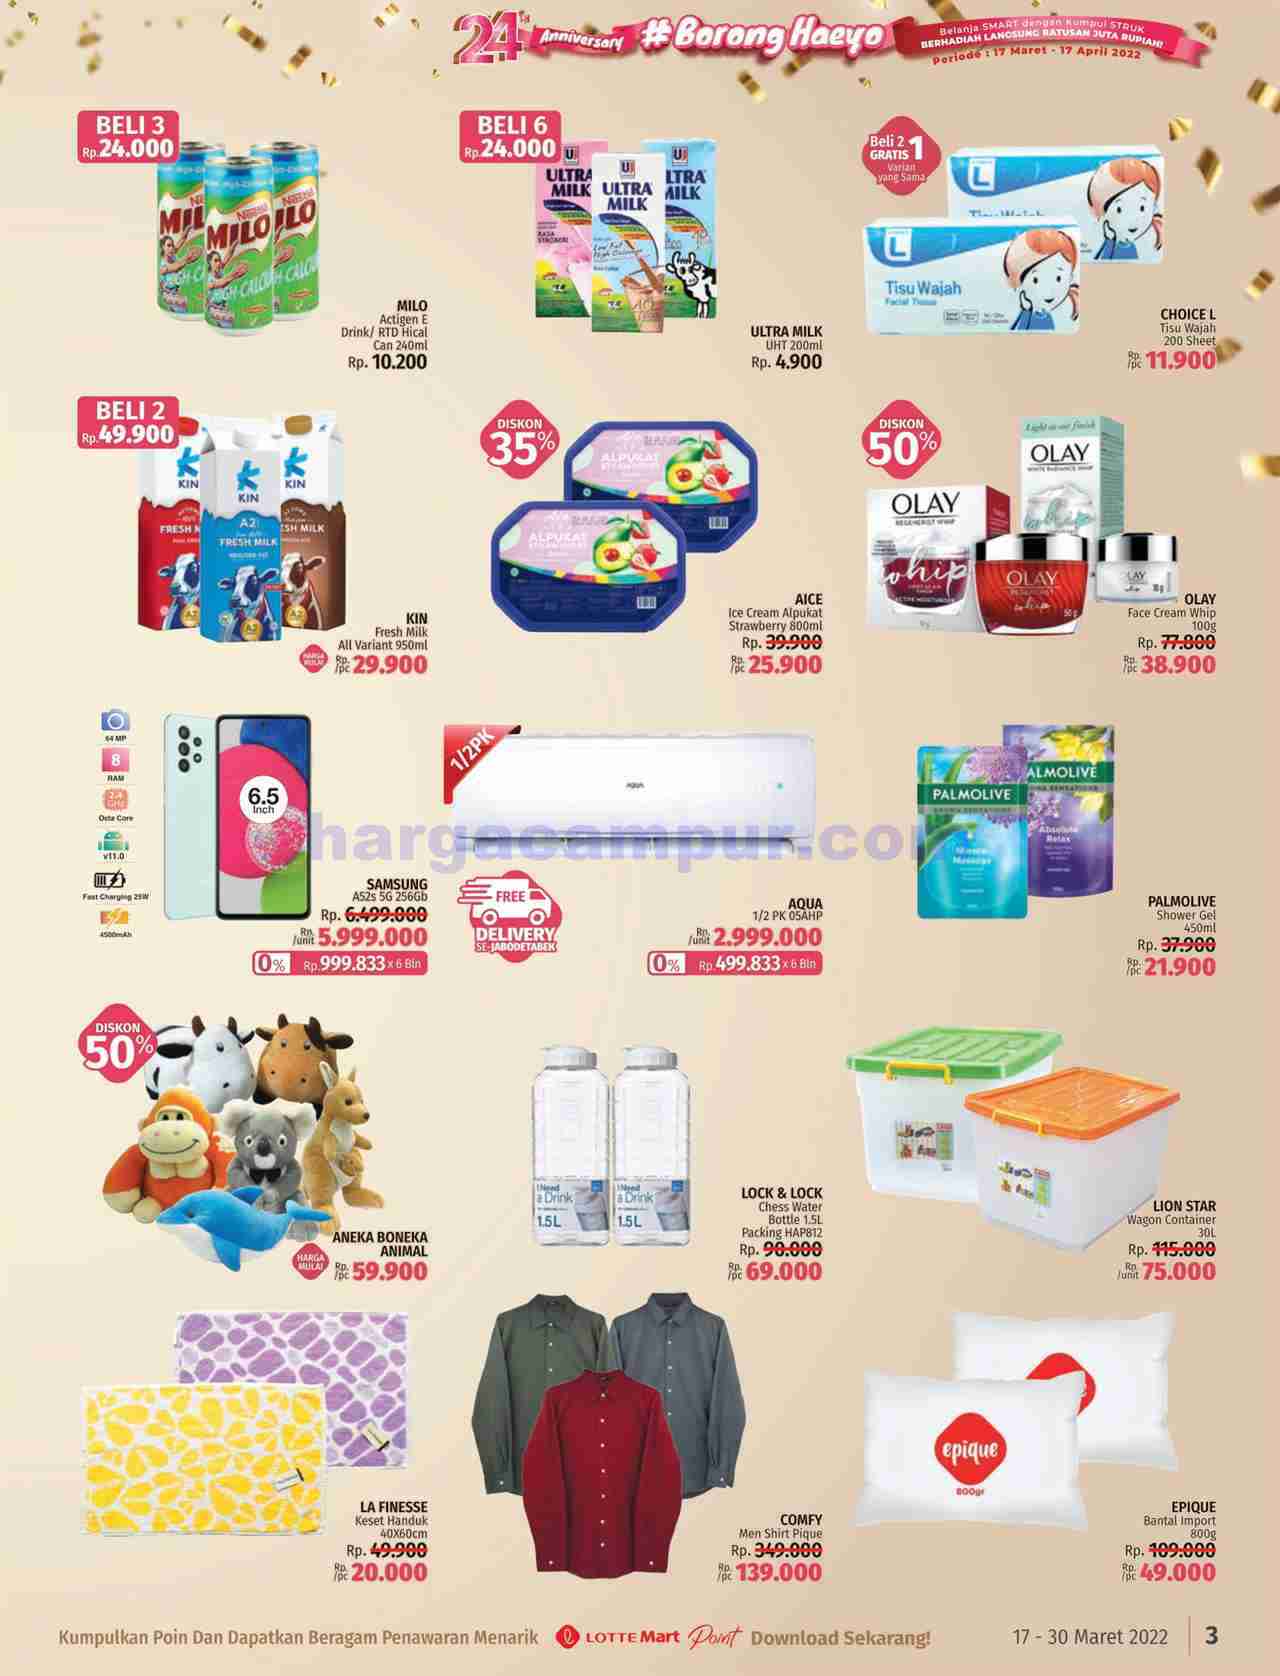 Katalog Promo Lottemart Terbaru 17 30 Maret 2022 3